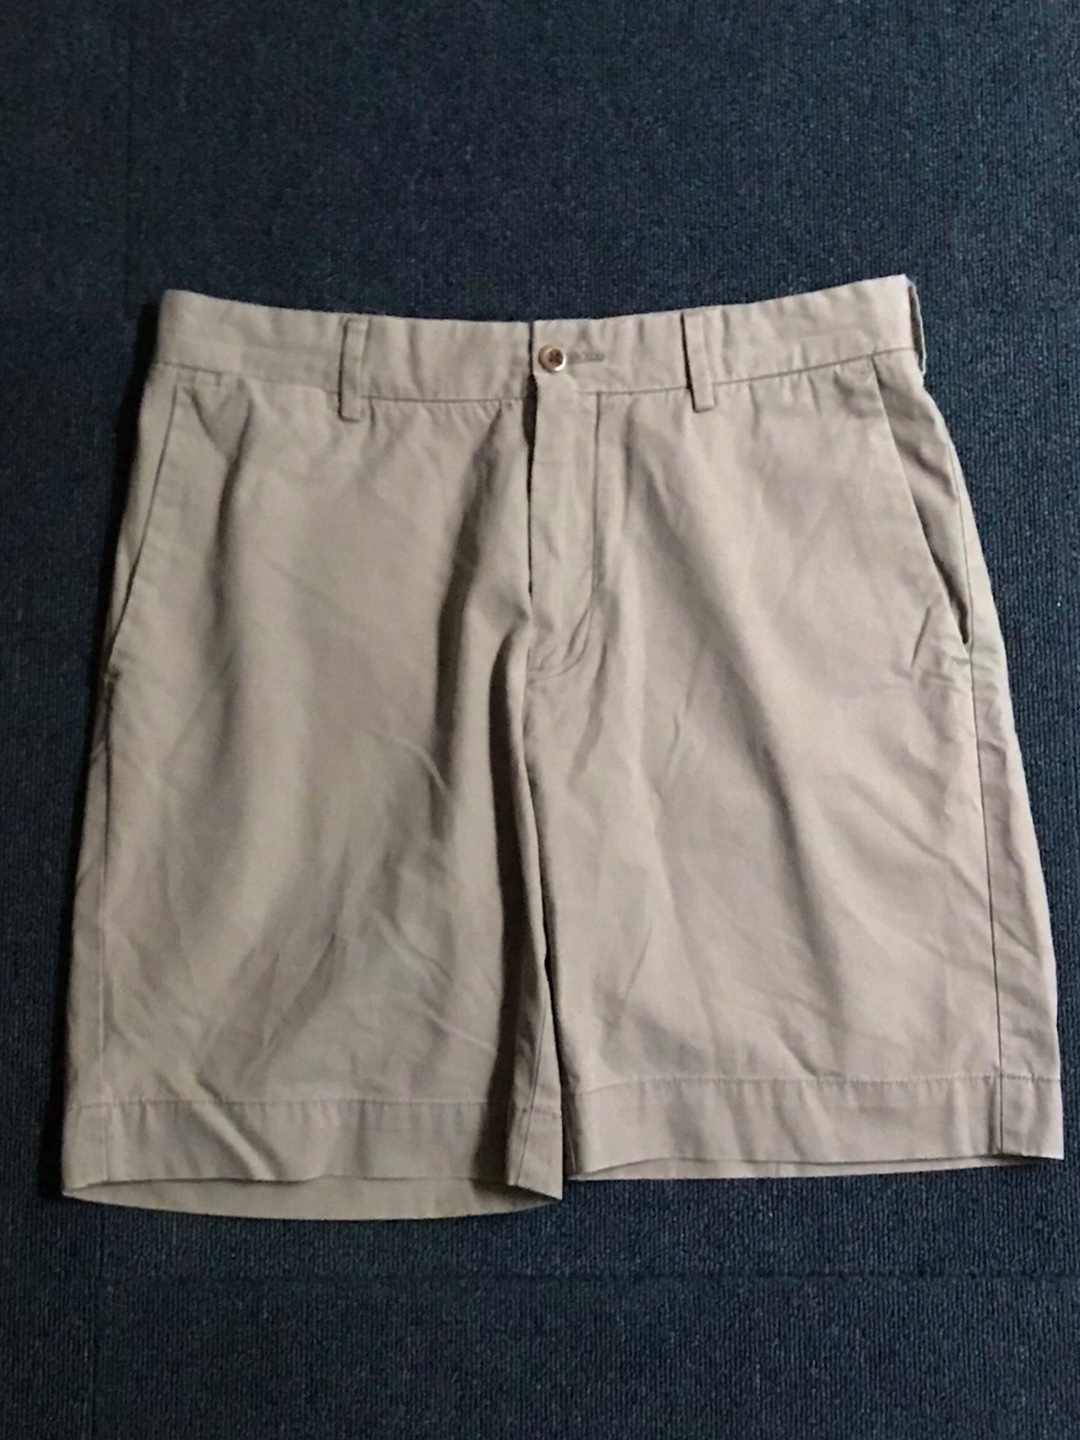 Polo RL pima cotton chino shorts (32 size, ~32인치 추천)